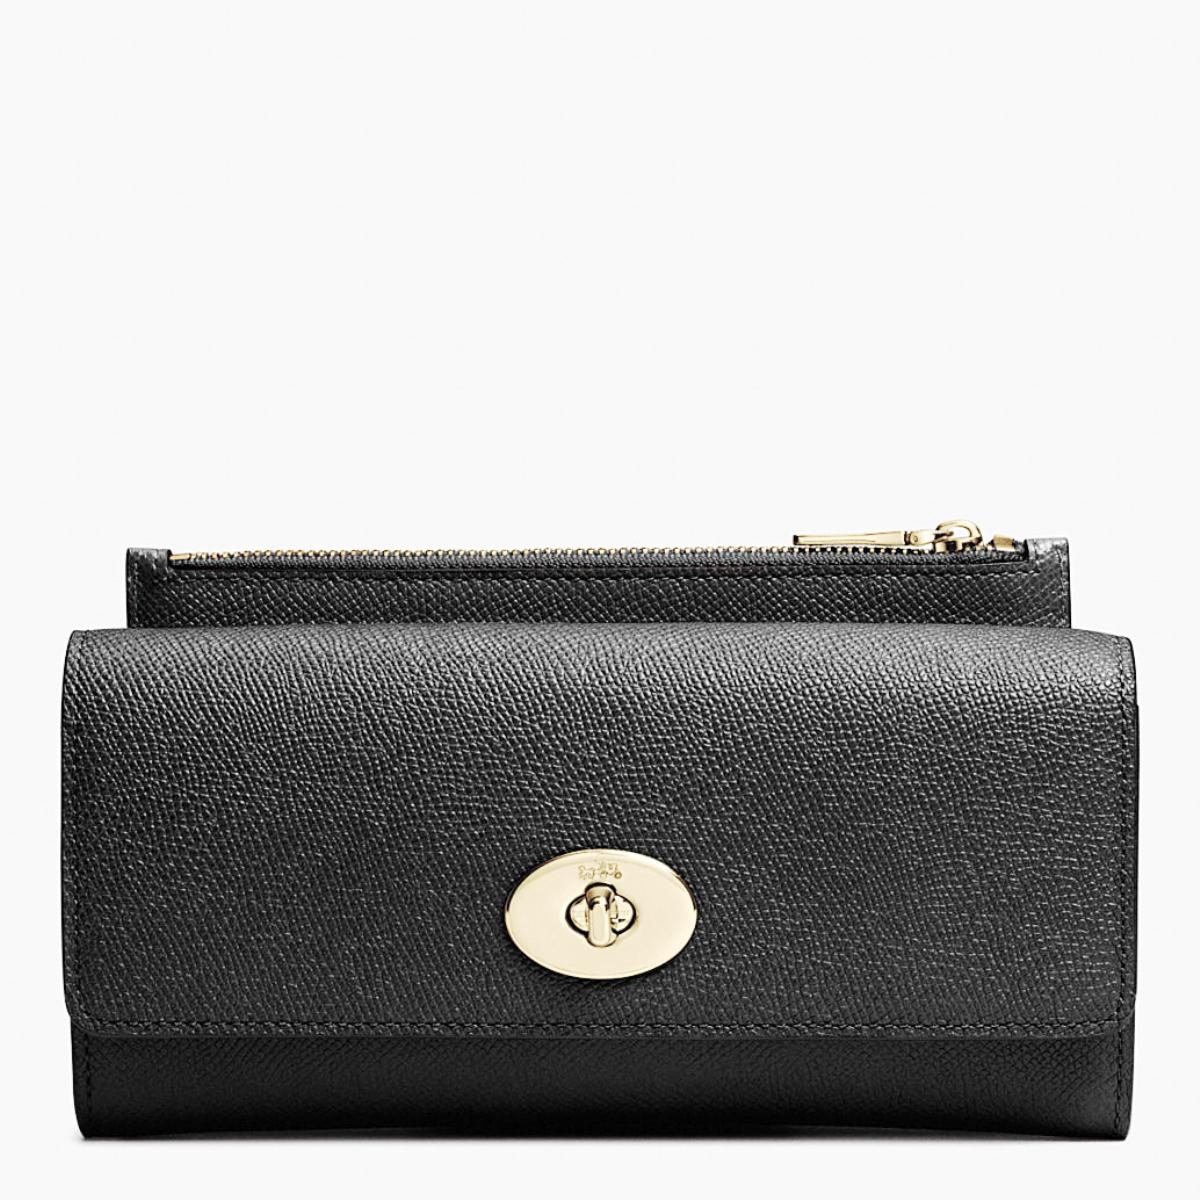 Popular Coach New Wallet For Women 2015 - Blog for Best Designer Bags